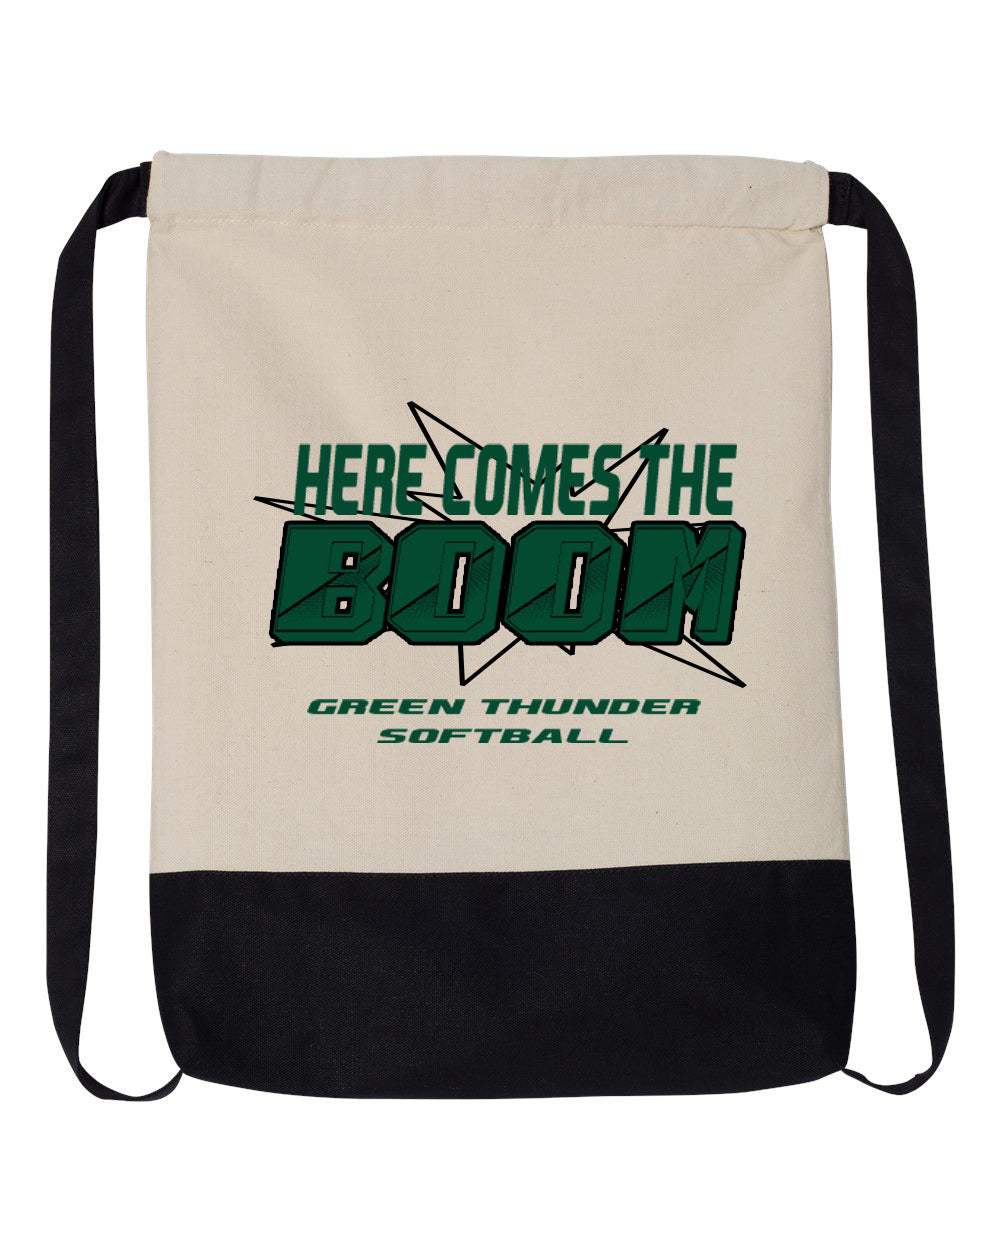 Green Thunder Design 3 Drawstring Bag